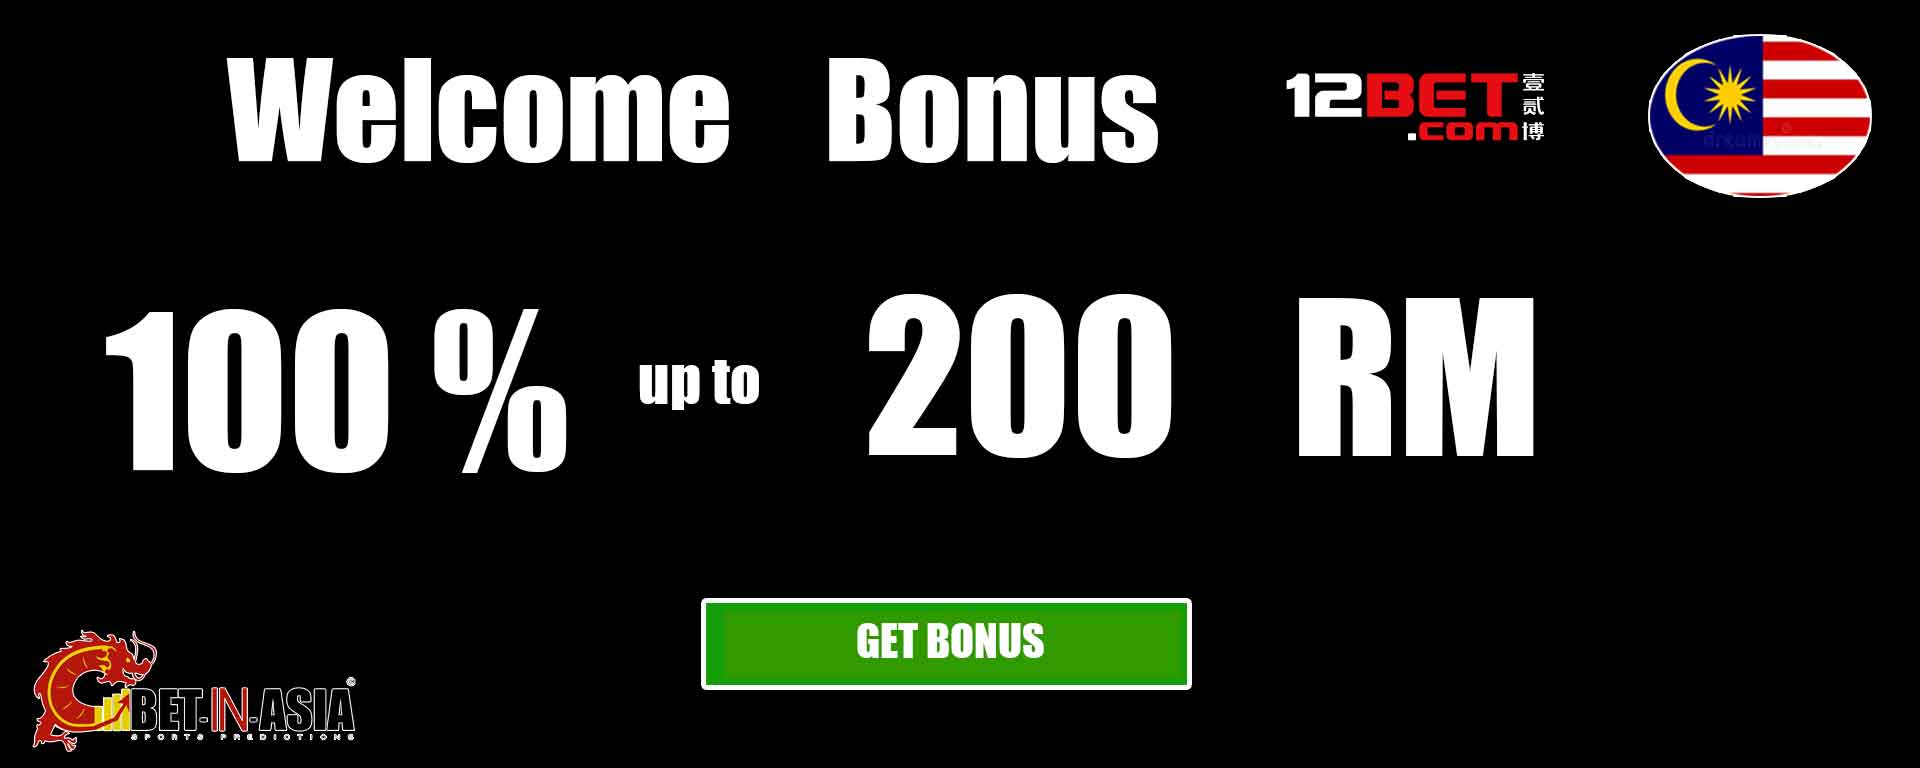 12bet Asia welcome bonus 100% on first deposit